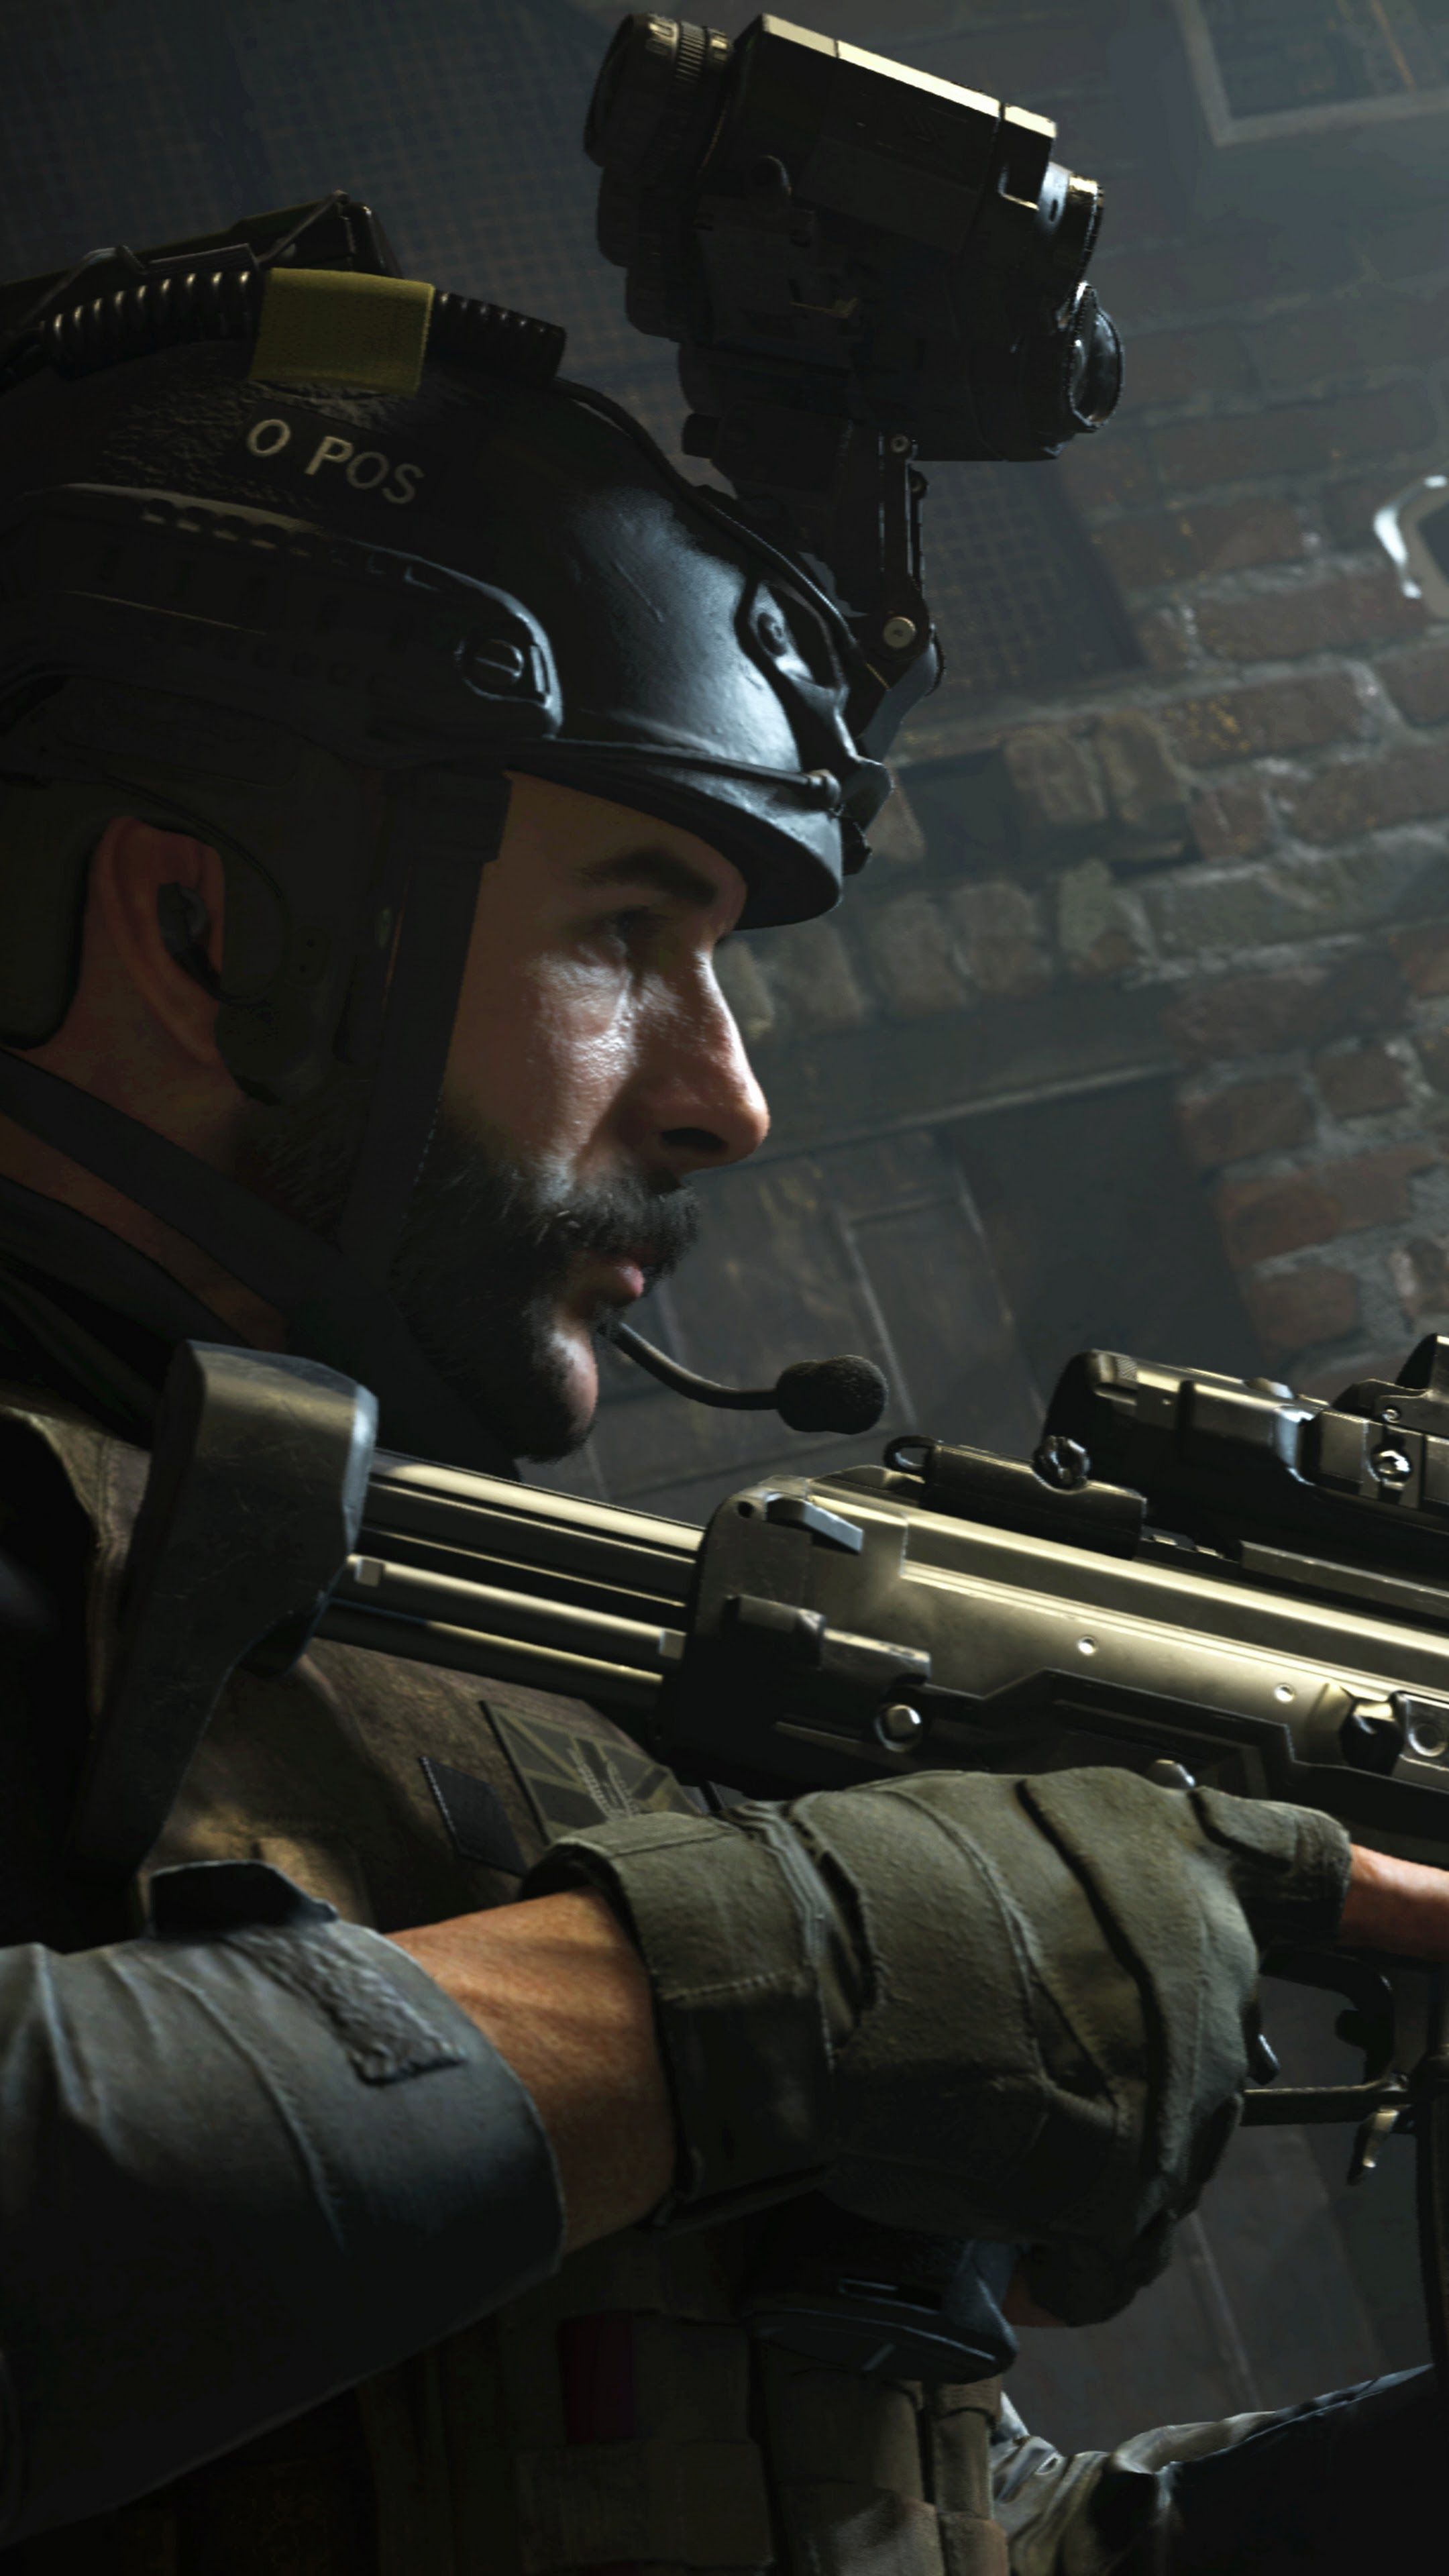 Call of Duty: Modern Warfare Captain Price 4K Wallpaper